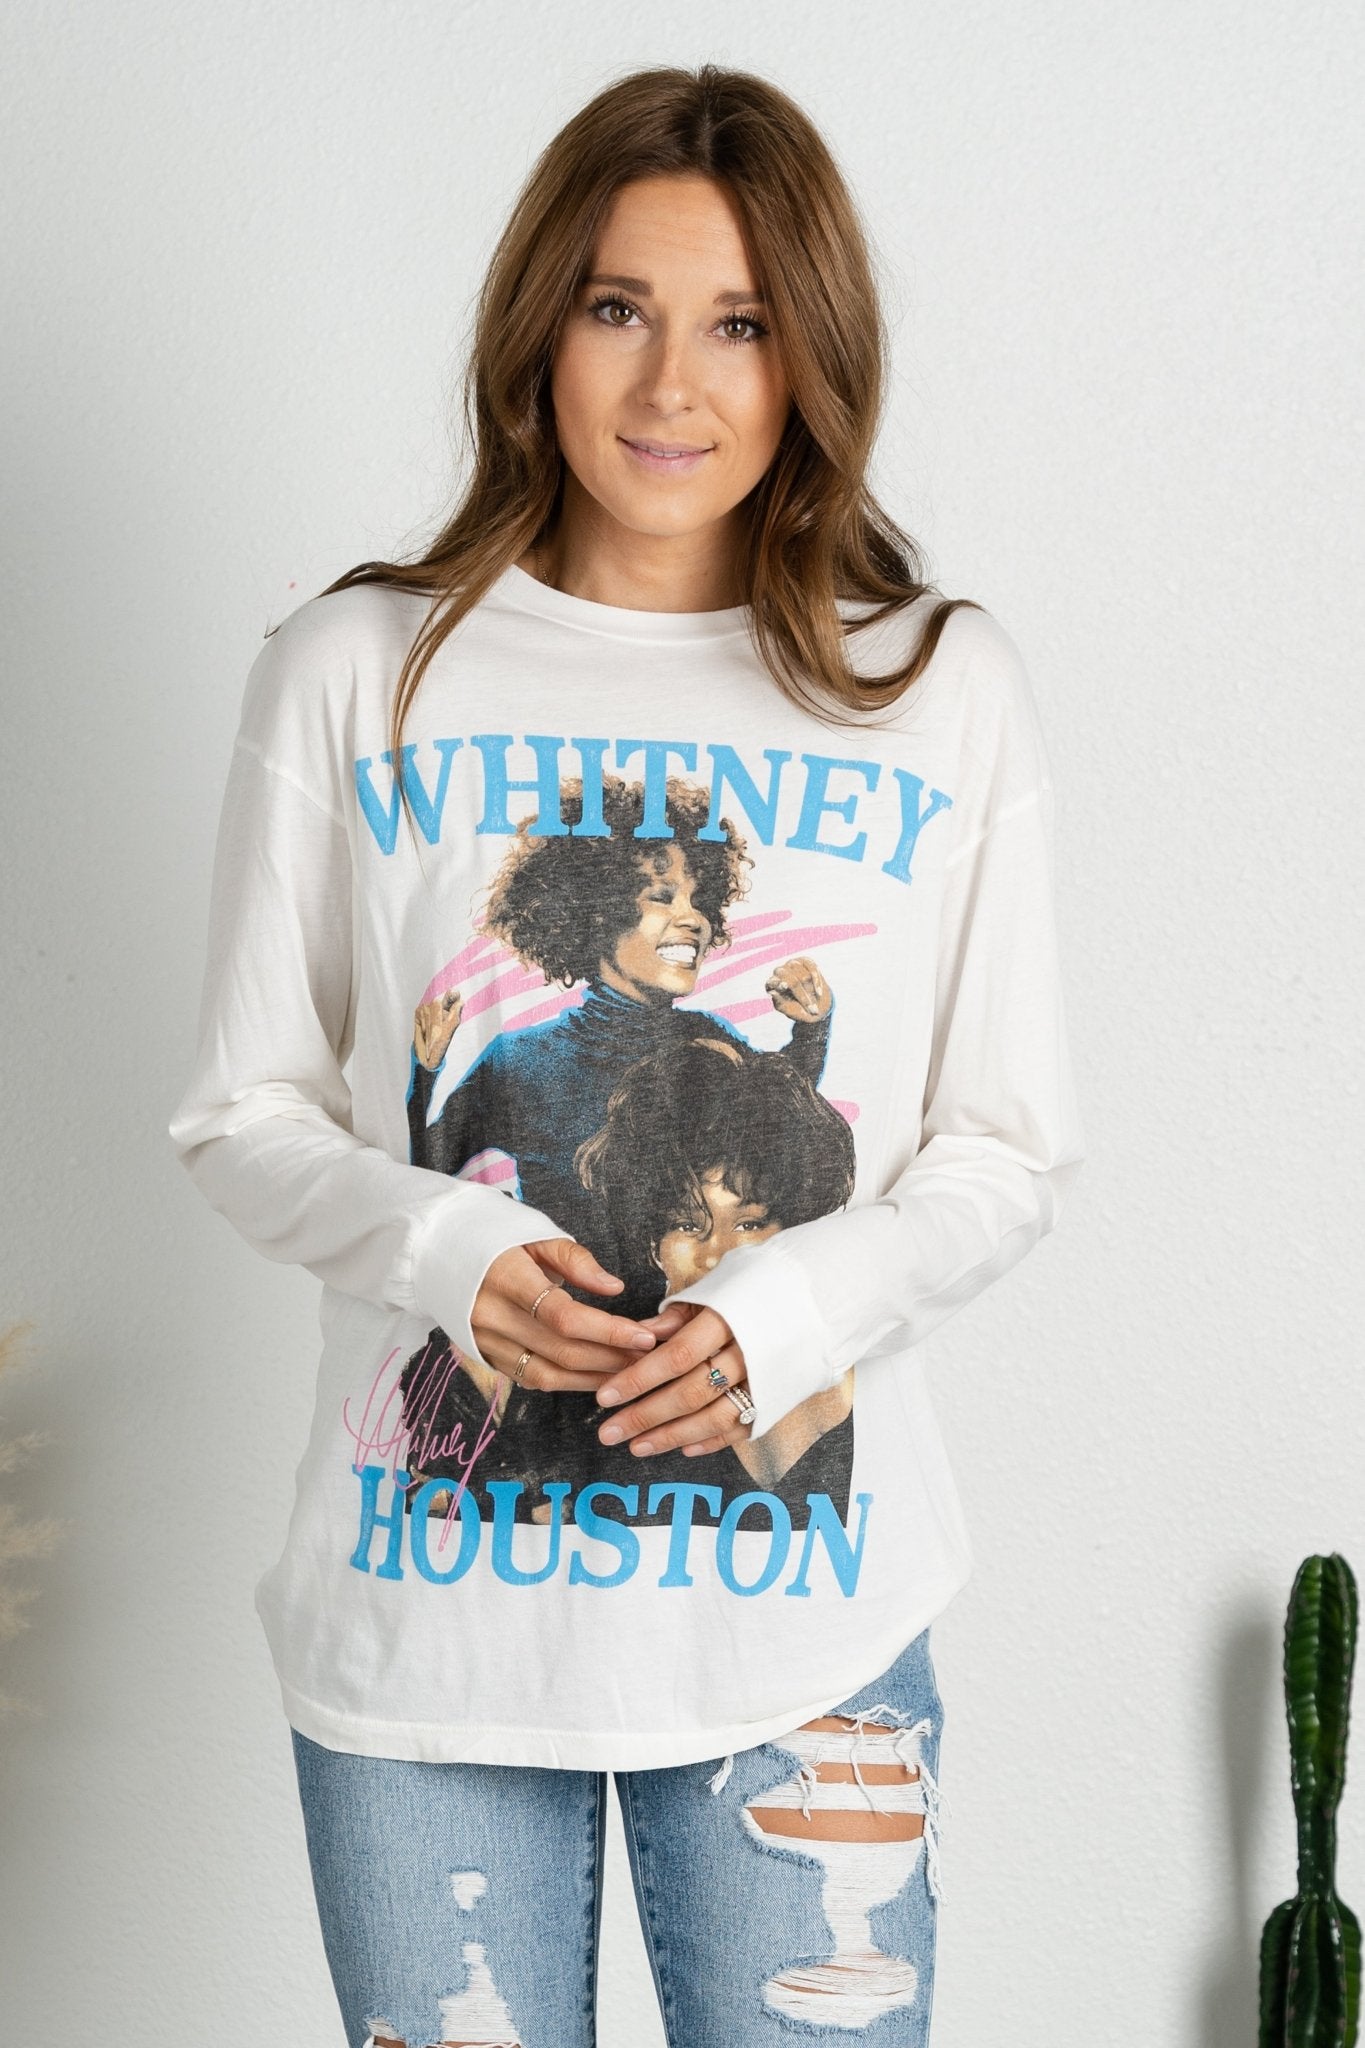 DayDreamer Whitney Houston dance long sleeve tee vintage white - Stylish Band T-Shirts and Sweatshirts at Lush Fashion Lounge Boutique in Oklahoma City